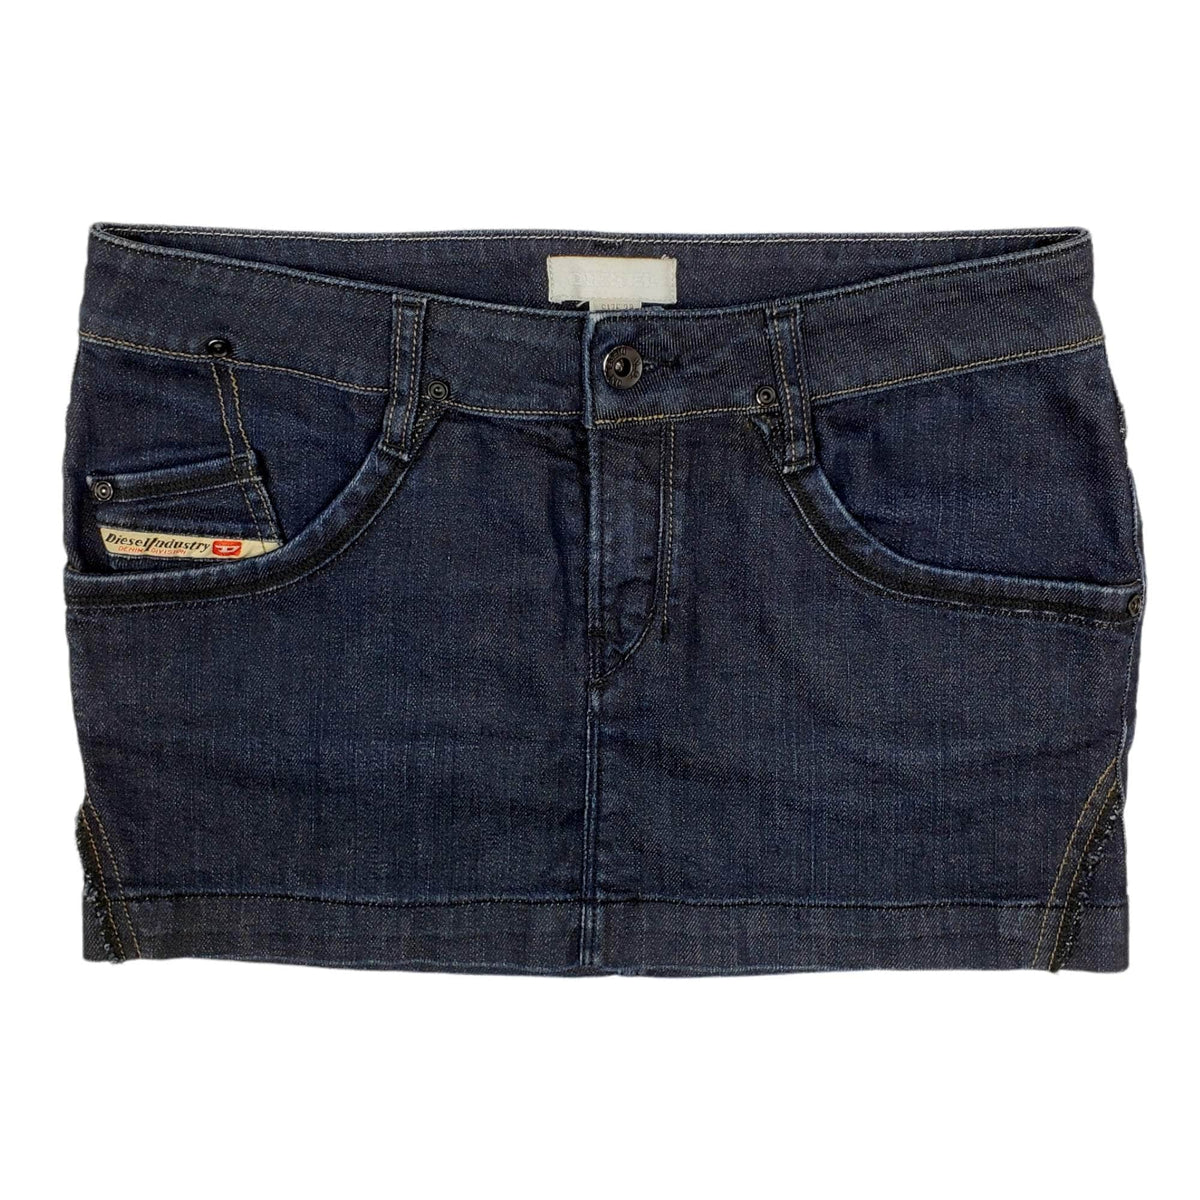 Diesel Indigo Micro Mini Jeans Skirt